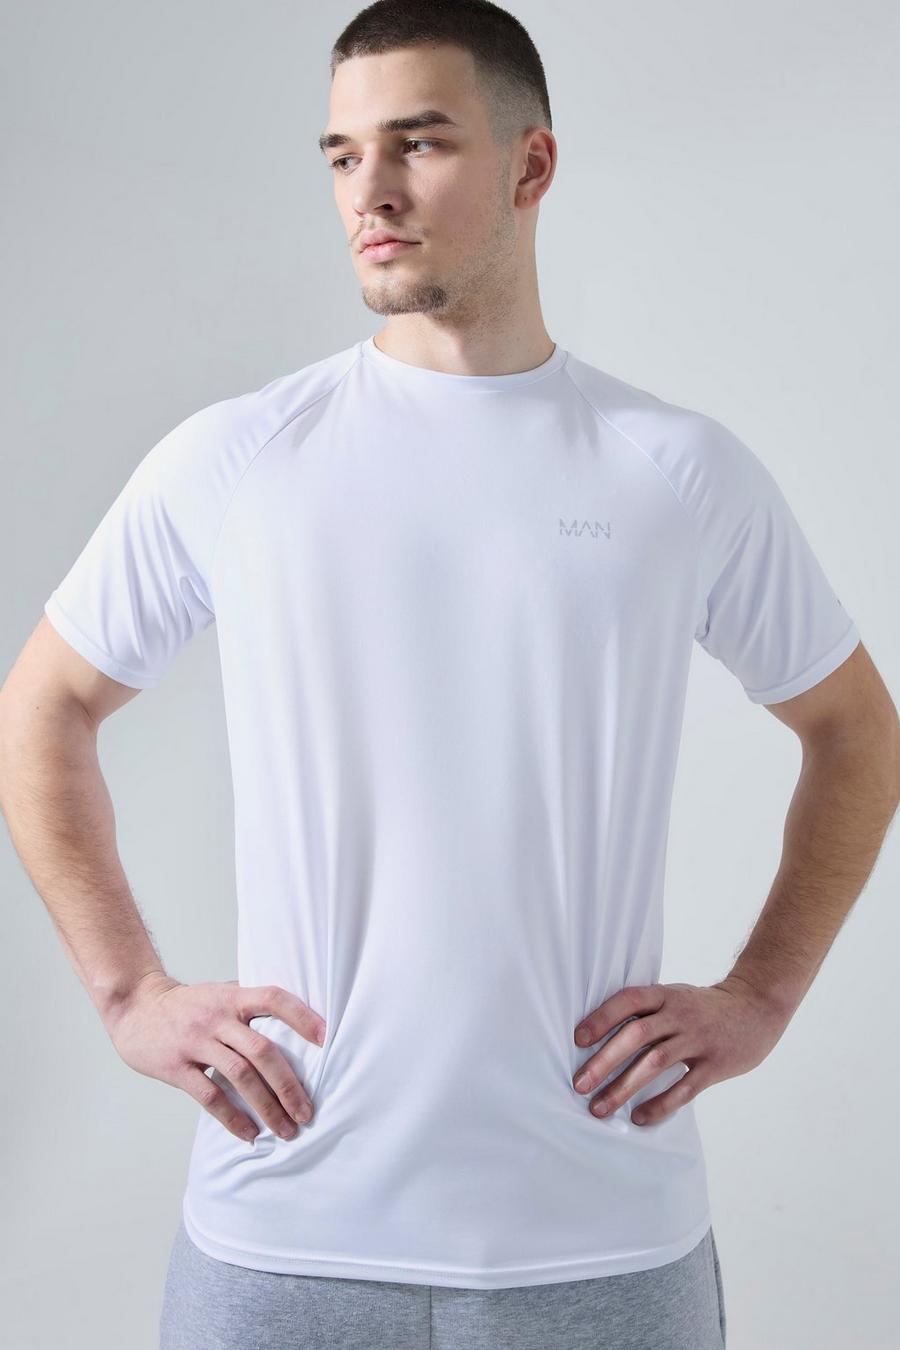 White Tall Raglan Man Active Fitness T-Shirt